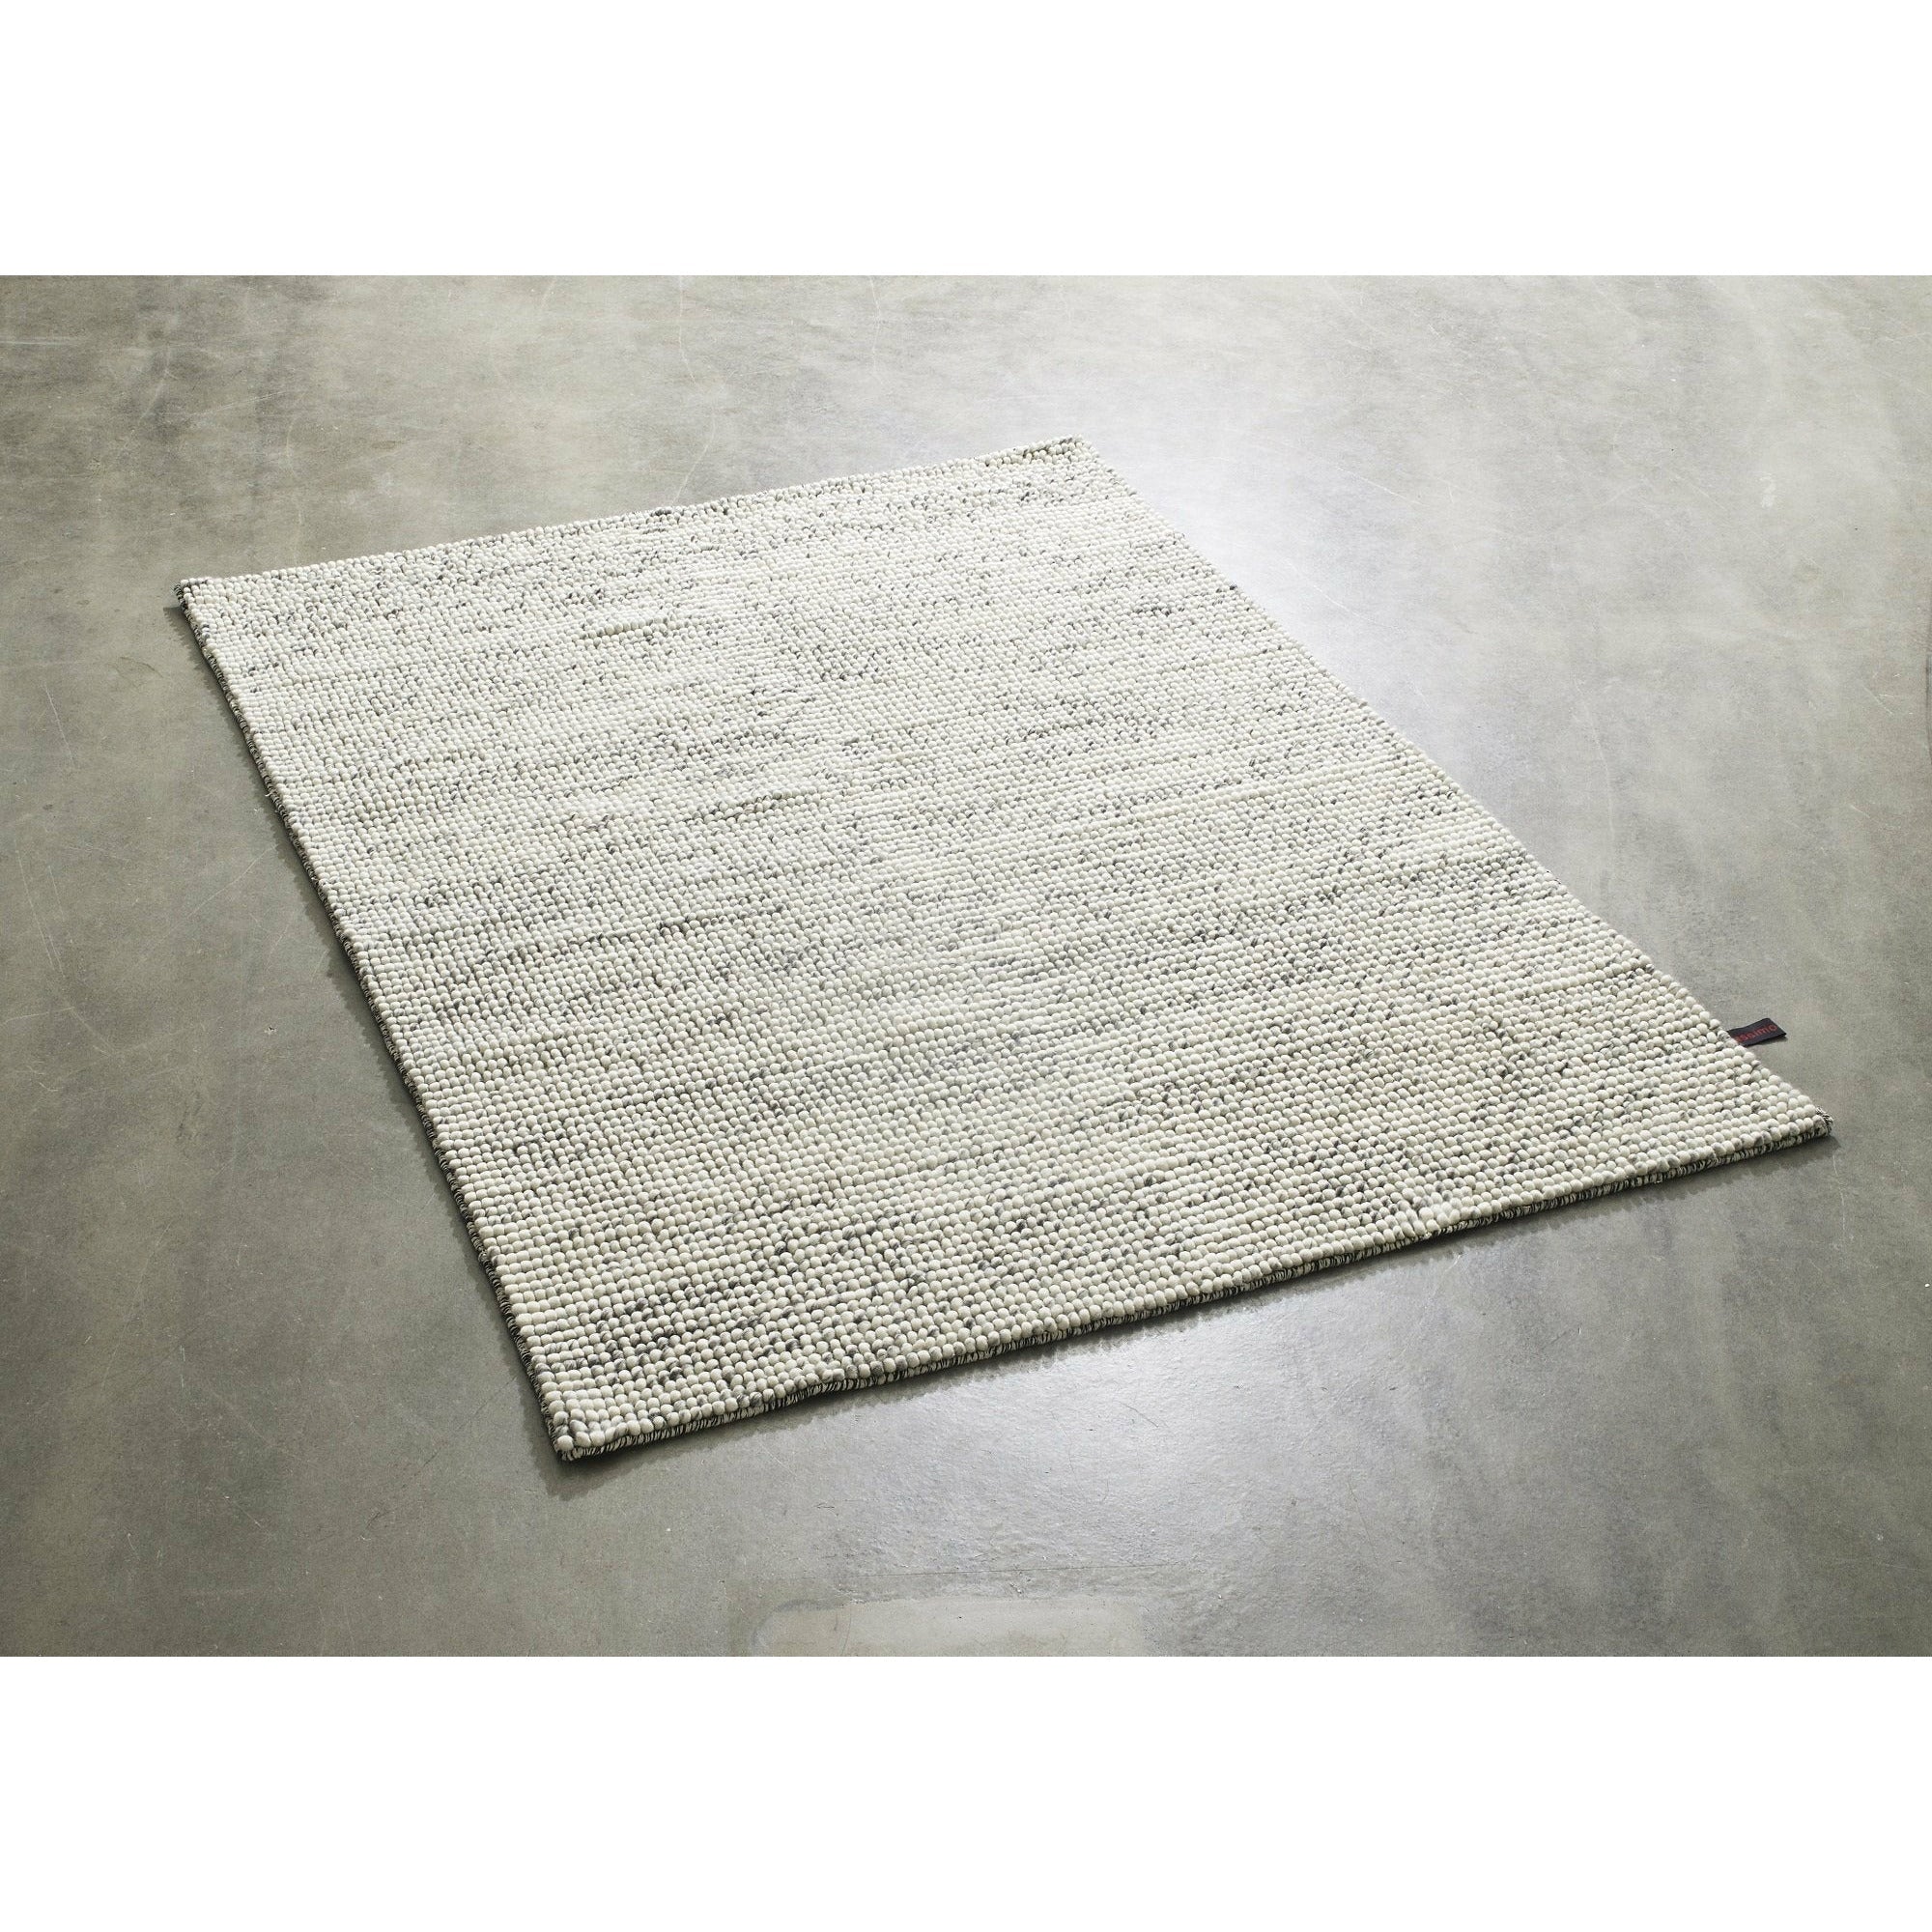 Massimo bobler tæppe blandet grå, 170x240 cm